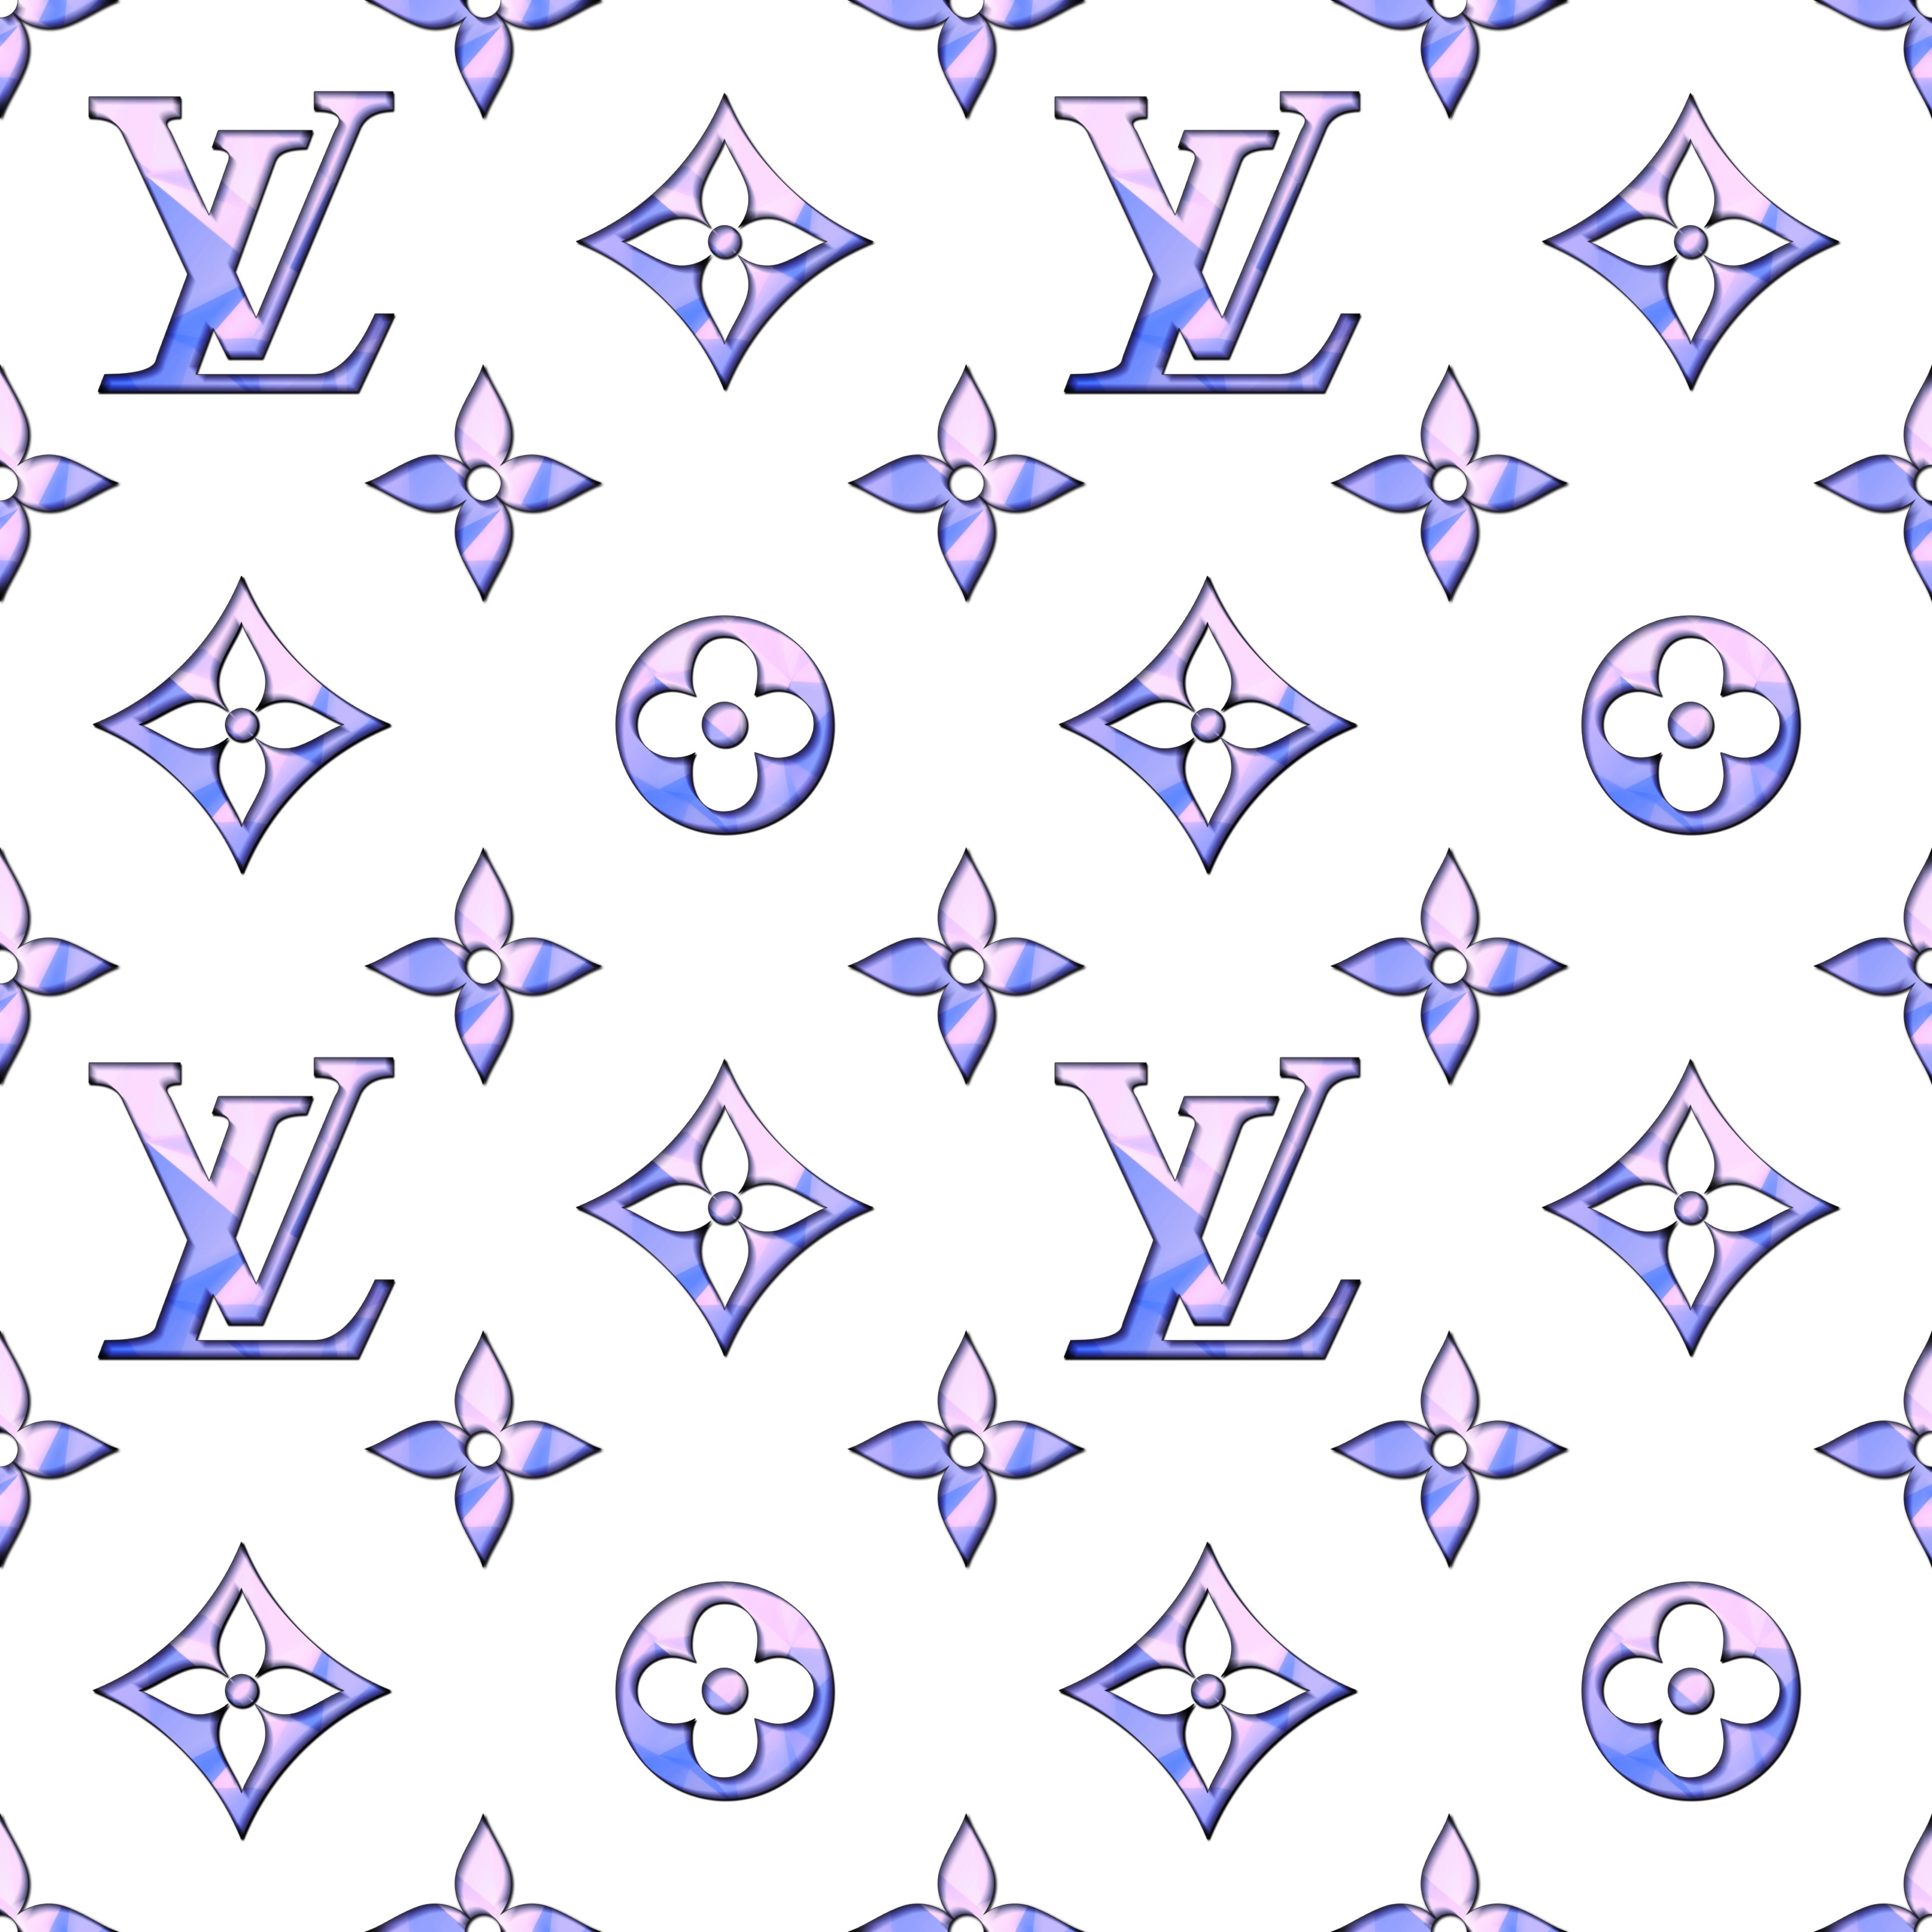 Louis Vuitton Logo Transparent Background by TeVesMuyNerviosa on DeviantArt